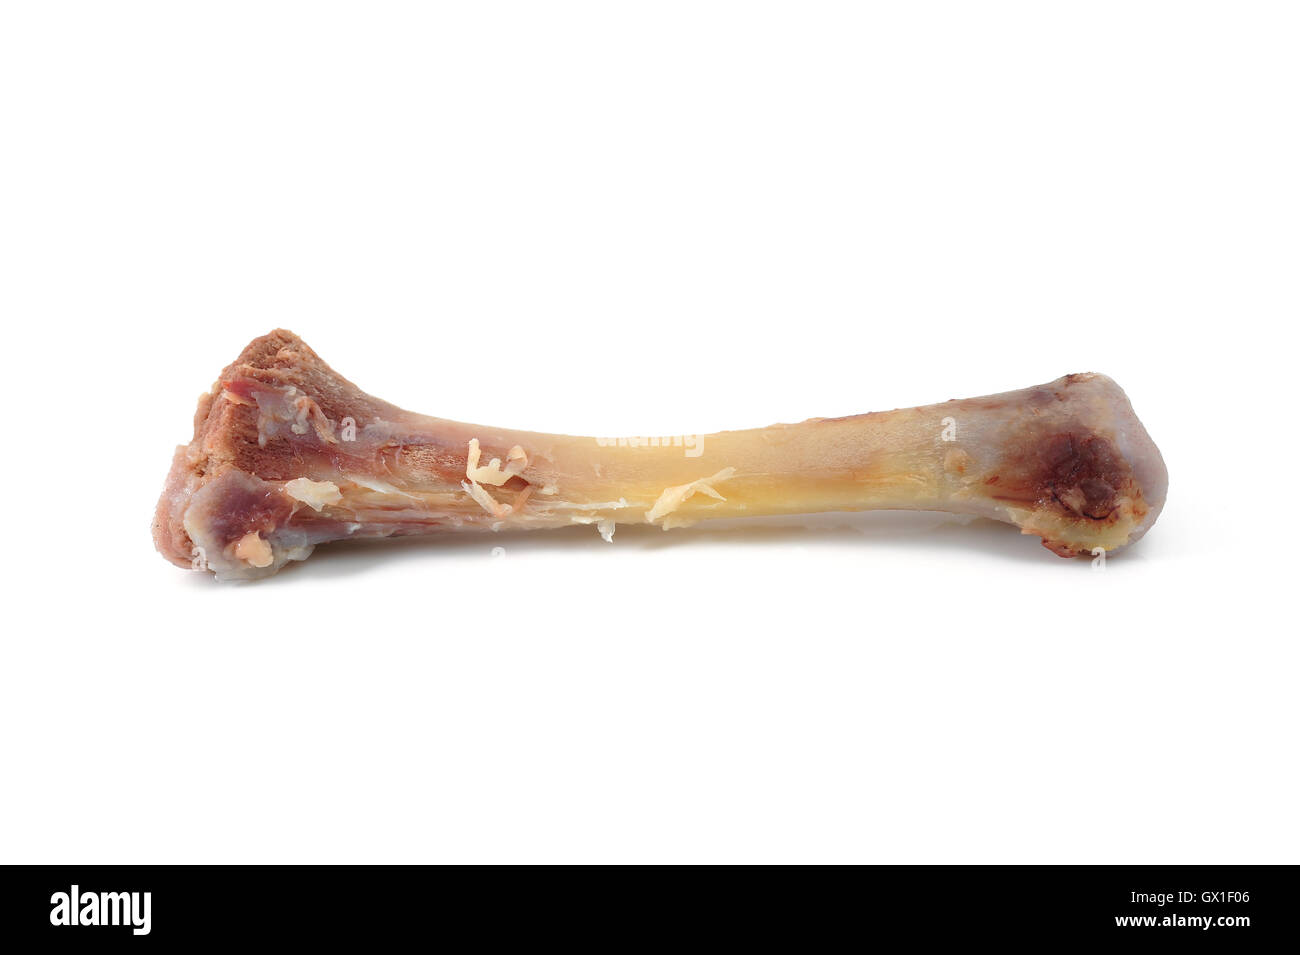 chicken-leg-bones-GX1F06.jpg